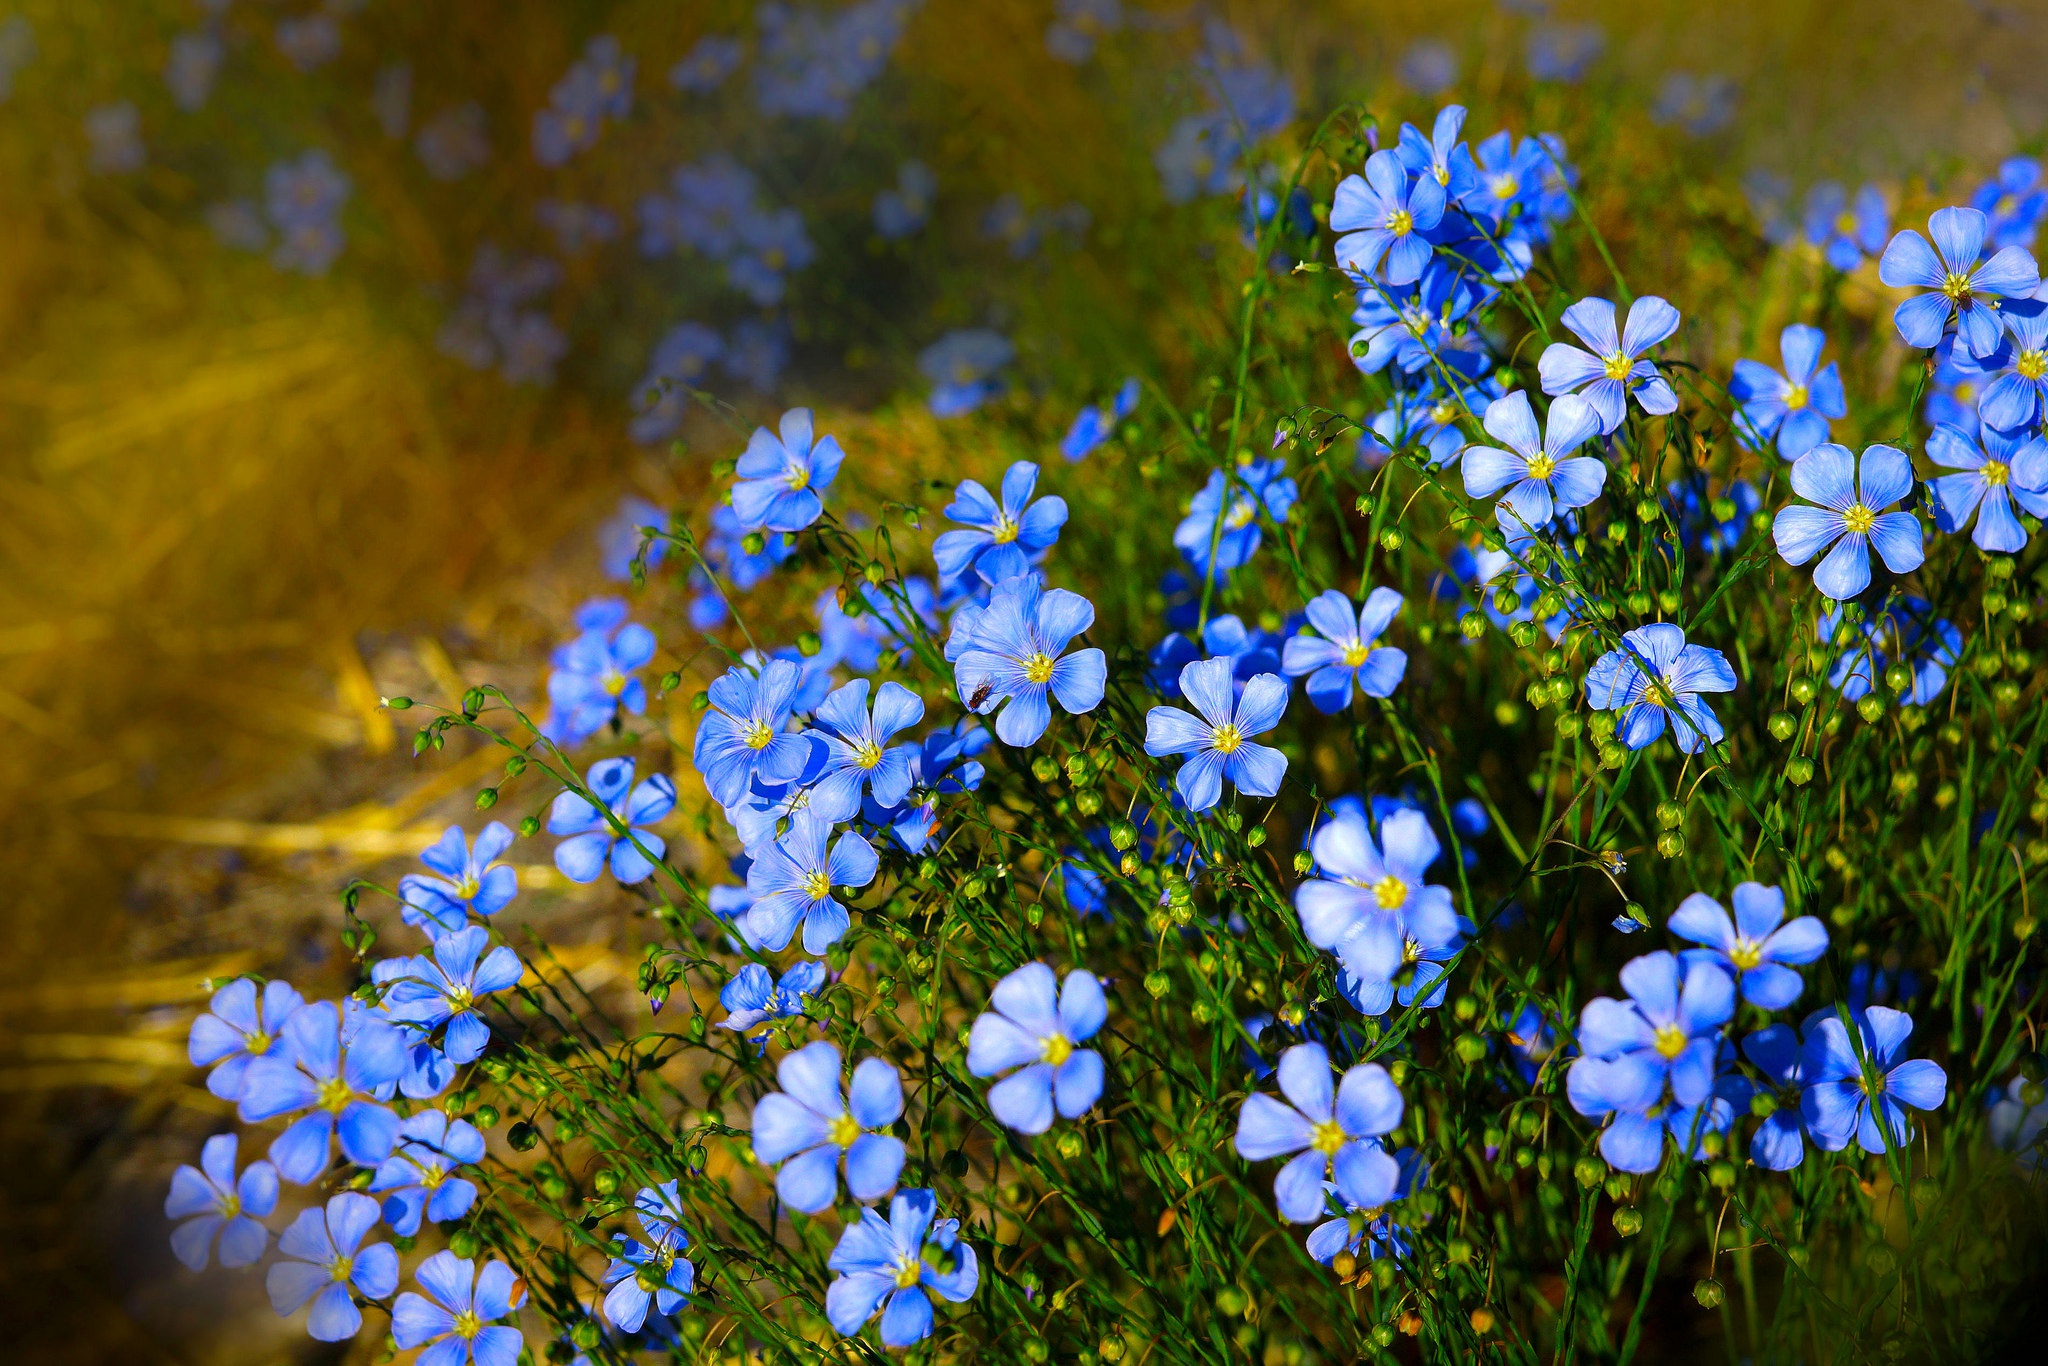 421112 descargar imagen tierra/naturaleza, nomeolvides, flor azul, flor, flores: fondos de pantalla y protectores de pantalla gratis